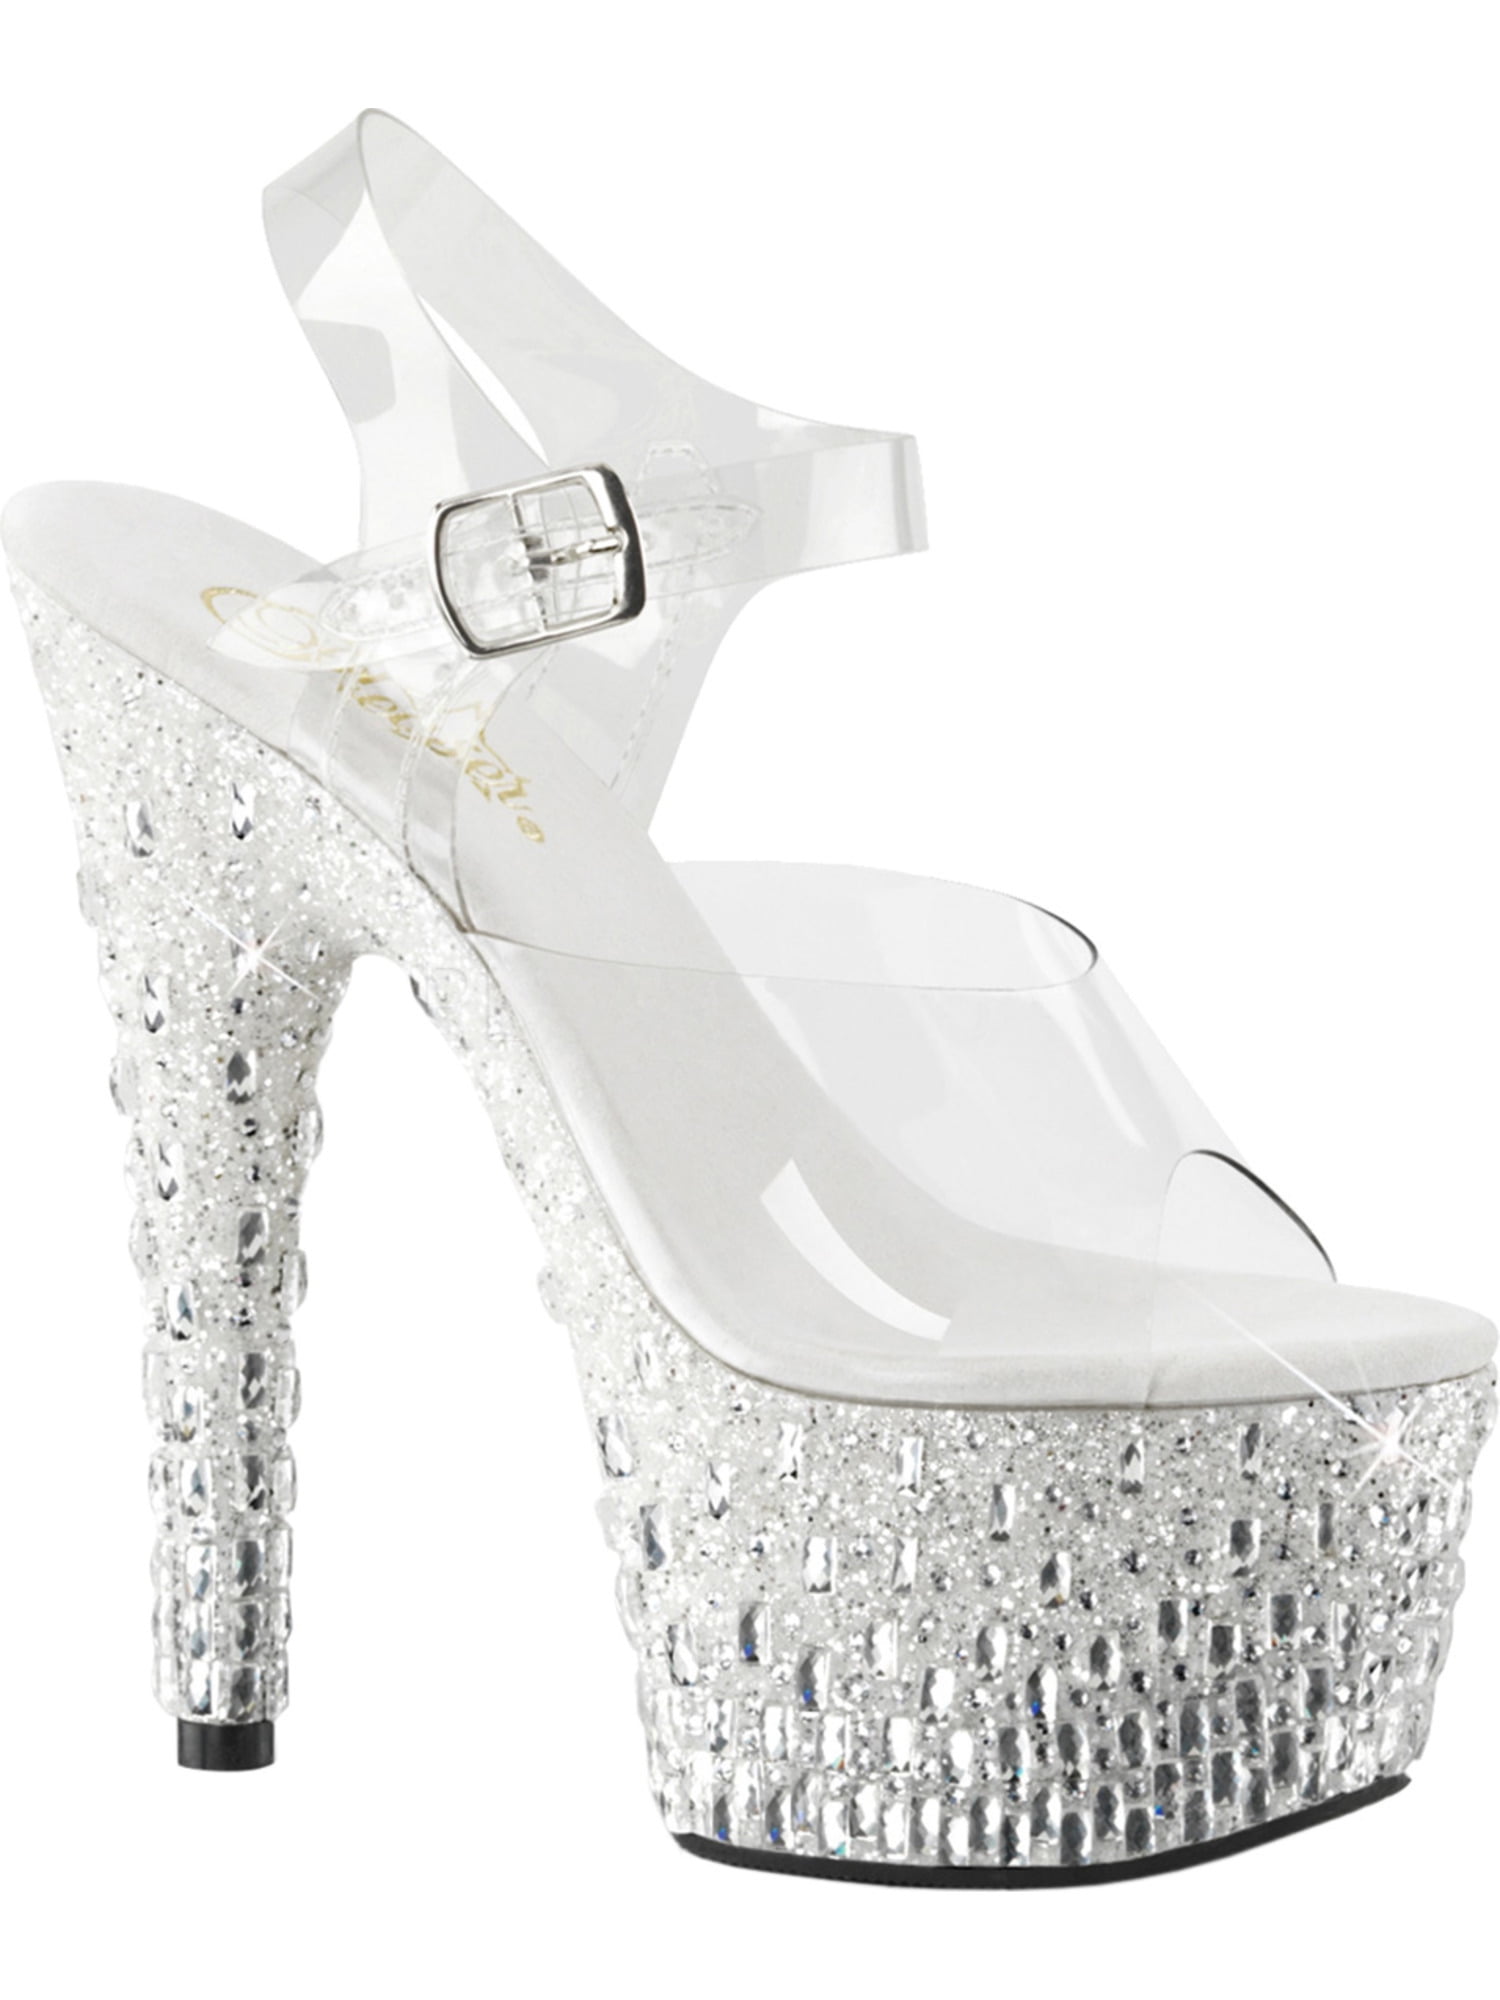 silver sparkly platform sandals